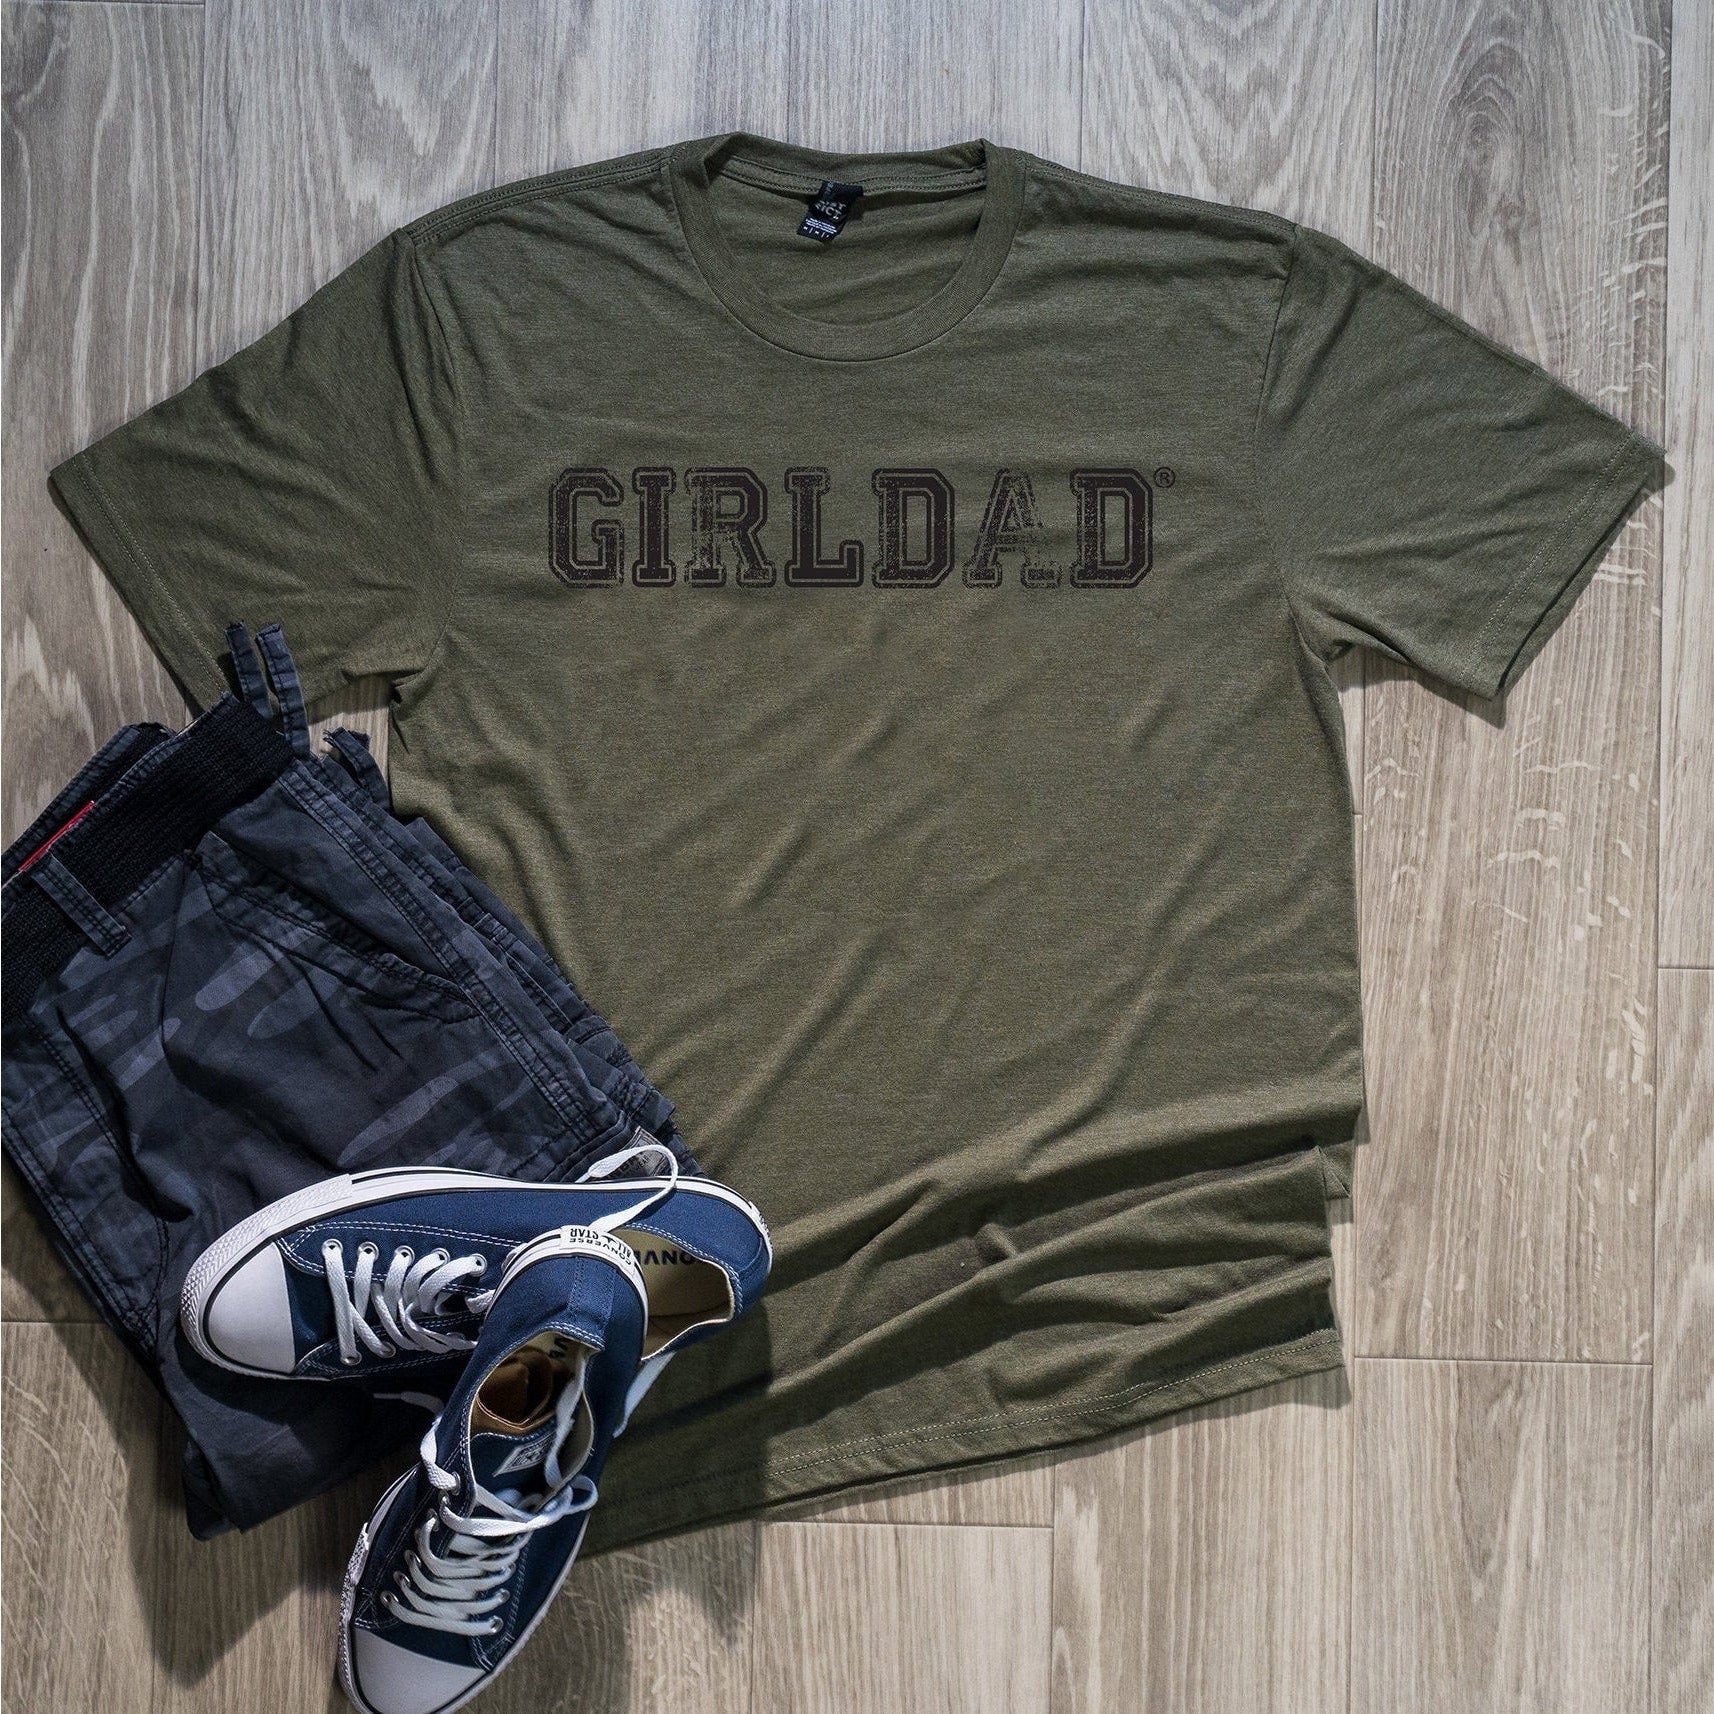 Girldad® Military Green Weathered Shirt